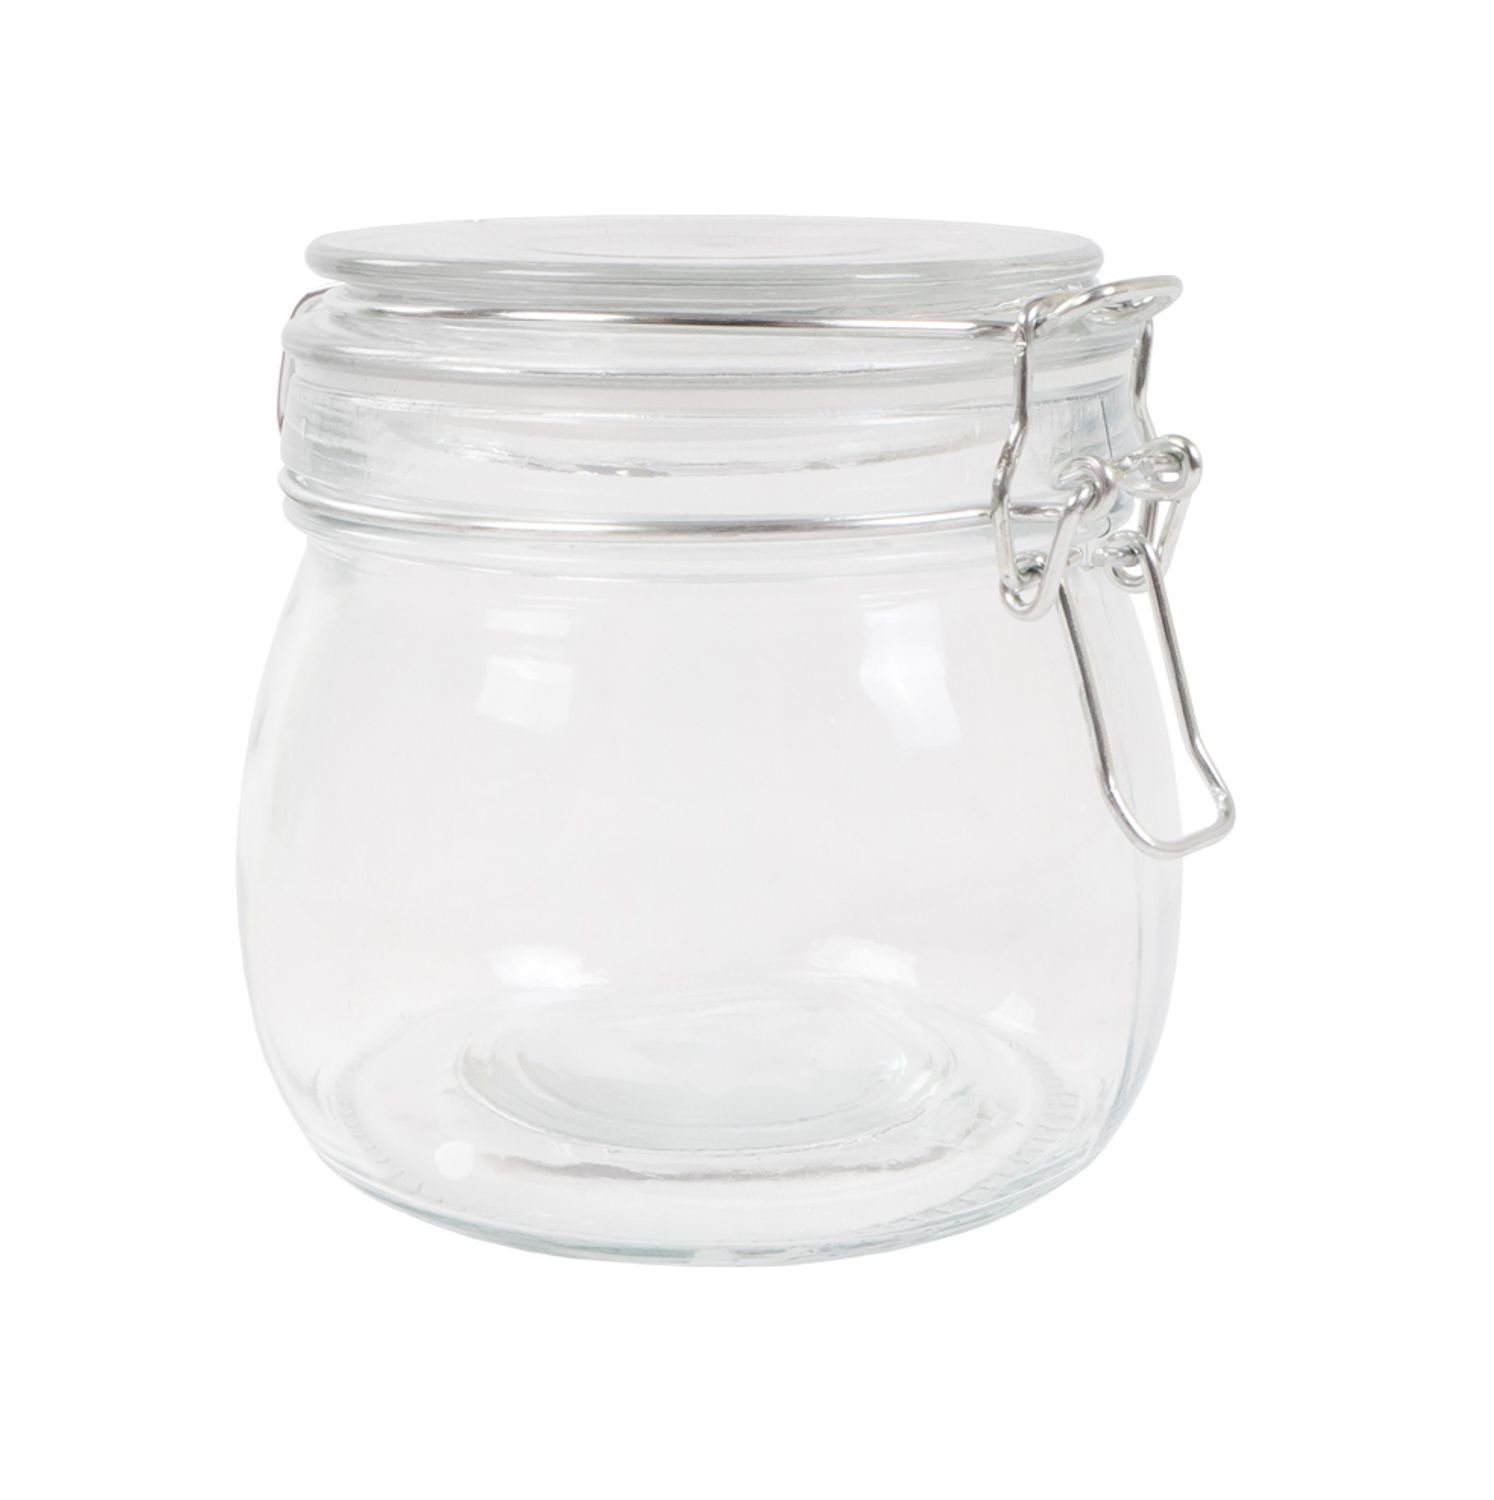 Vorr, Einmachgläser BURI Drahtbügelglas Vorratsdose Drahtbügelgläser transparent 500ml Gummiring mit Glas